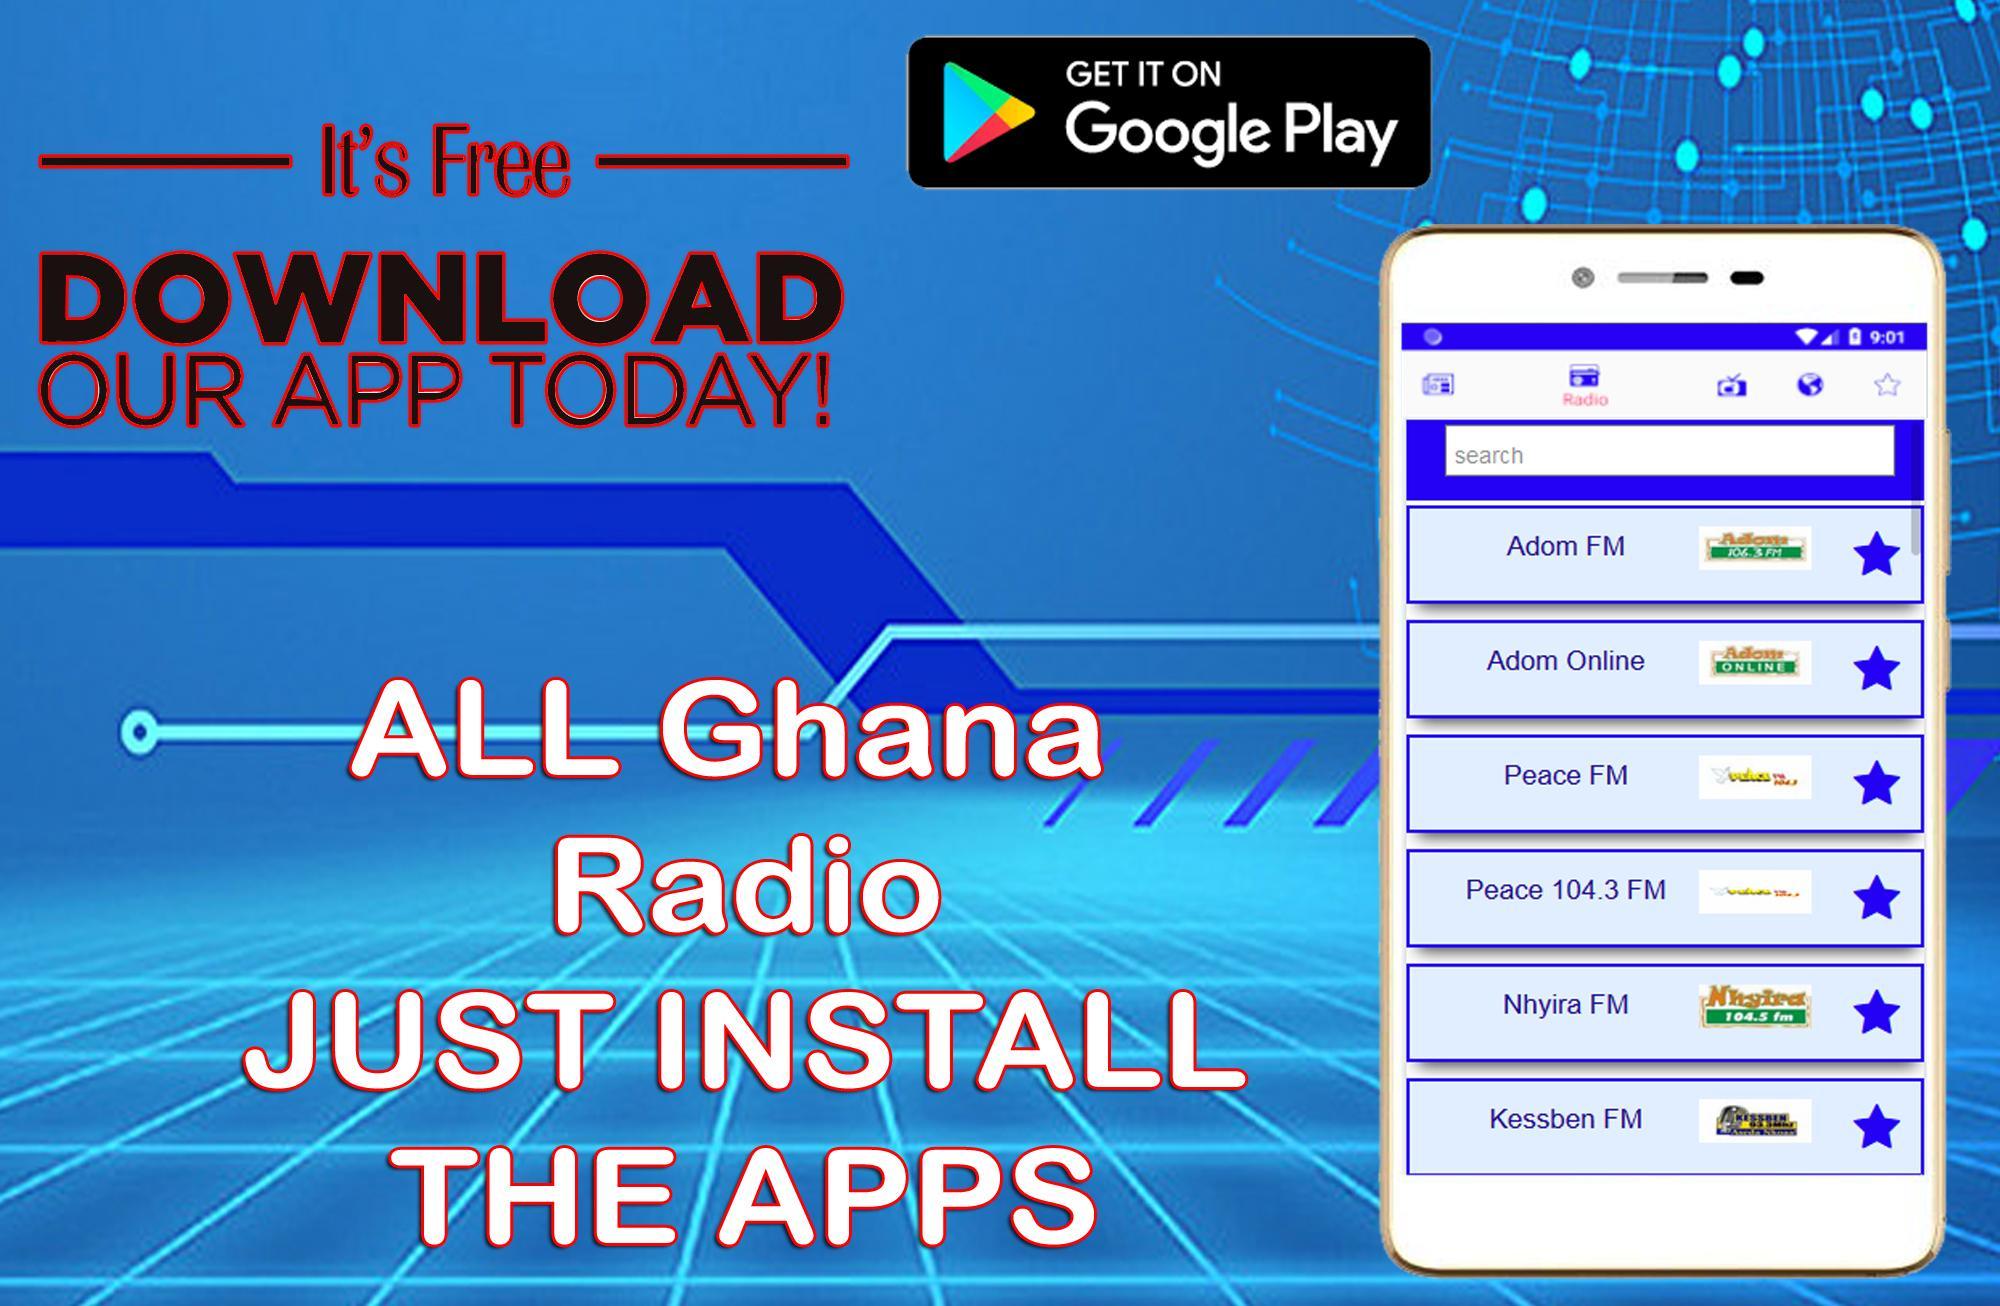 All Ghana Radios | Ghana Radio News TV | FM Radio for Android - APK Download